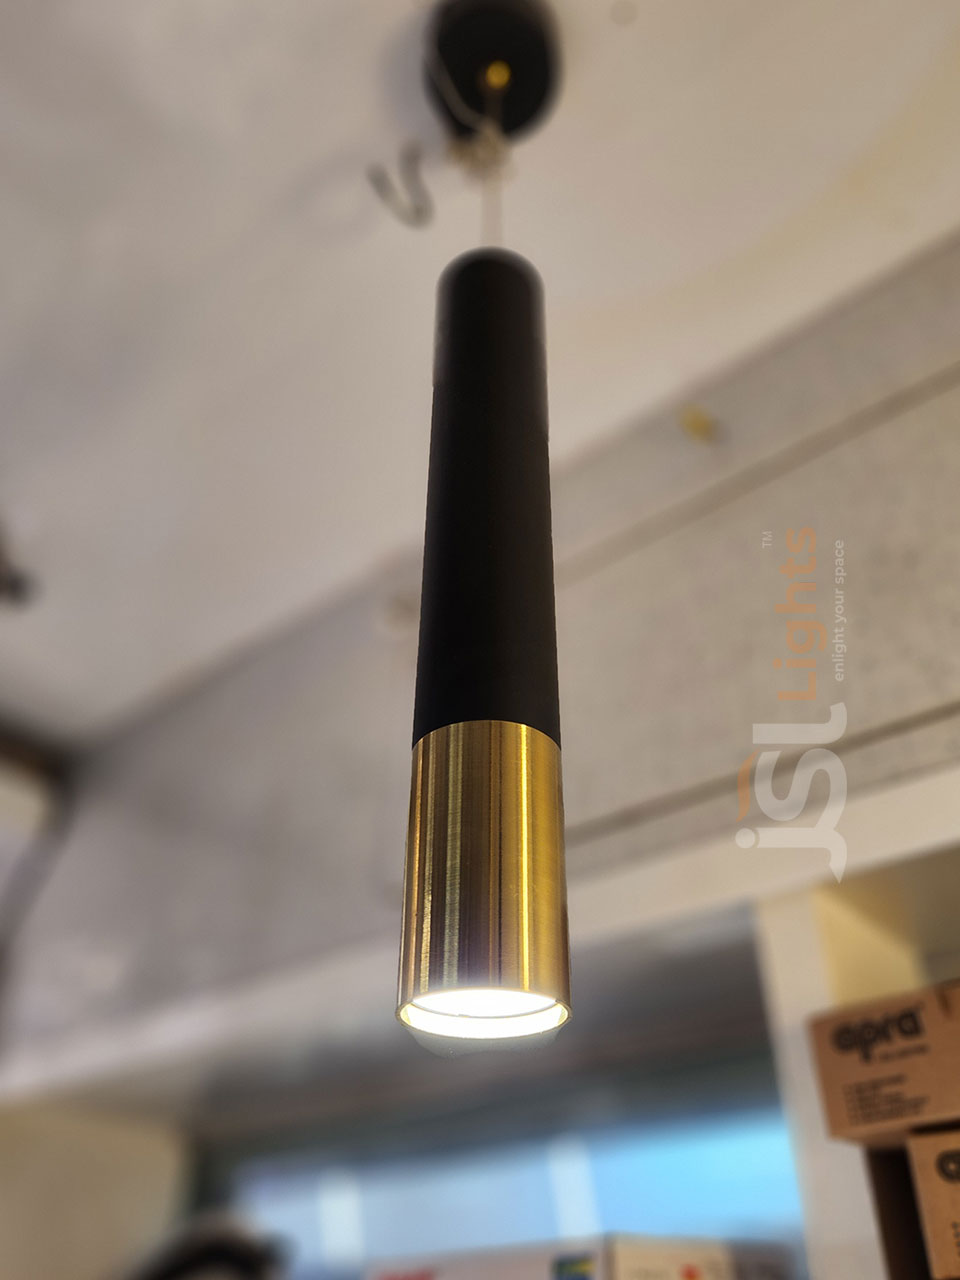 18W LX 382 Black Antique Fancy Hanging Lights for Home Ceiling Pendant Light with 3000K LED Color ON